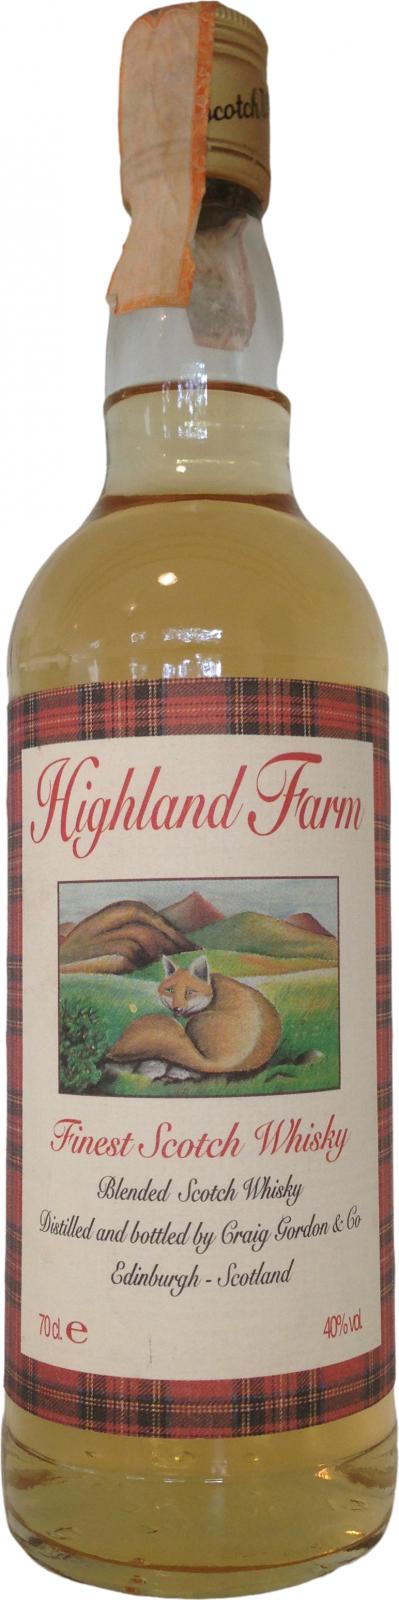 Highland Farm Finest Scotch Whisky 40% 700ml